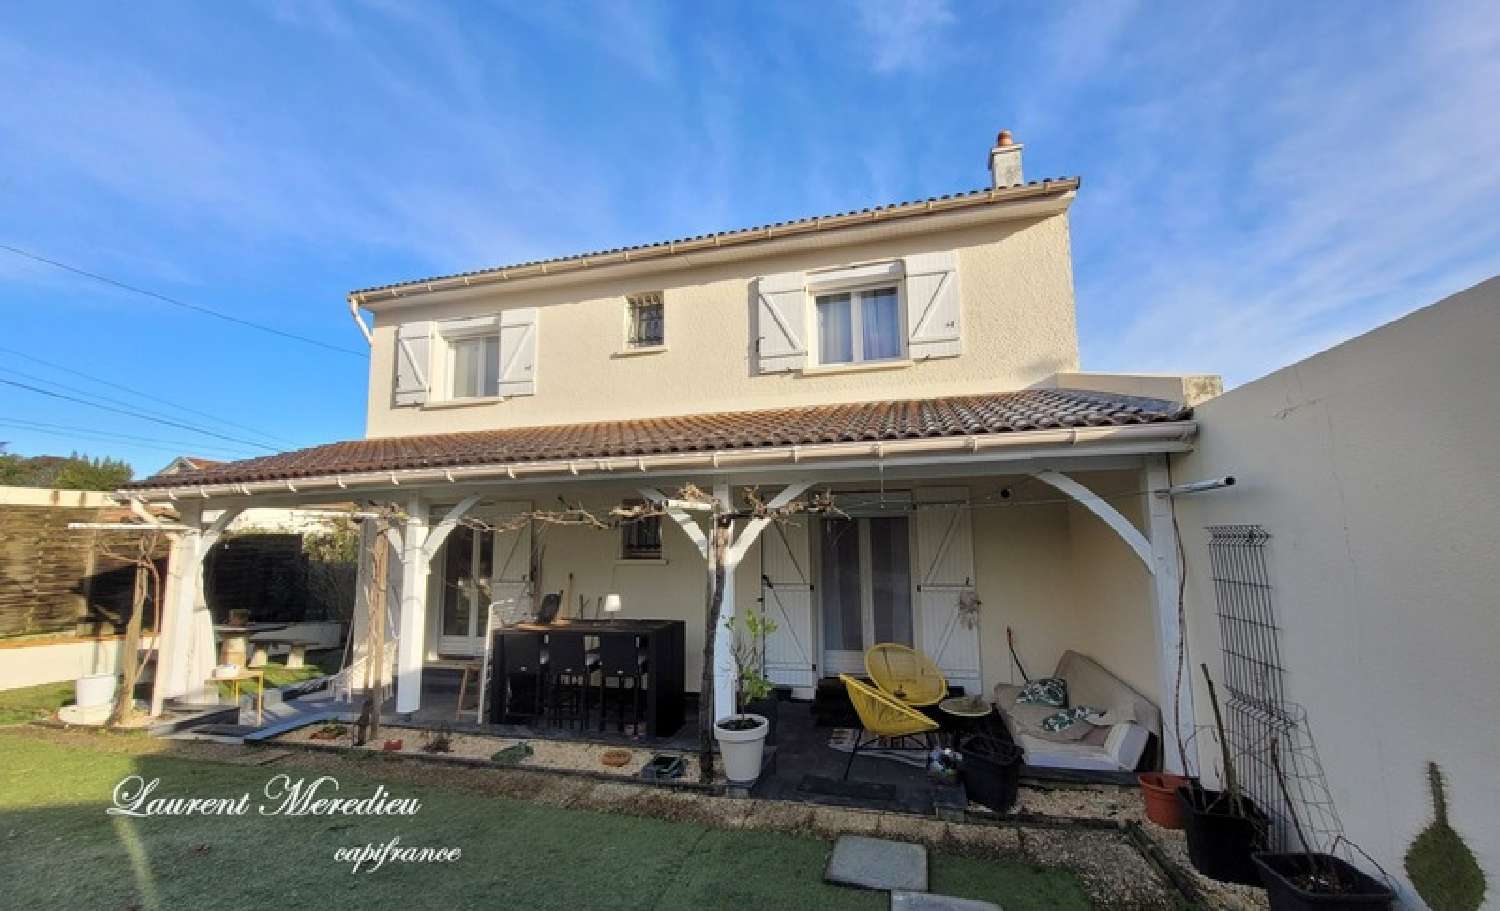  à vendre maison Bassens Gironde 6